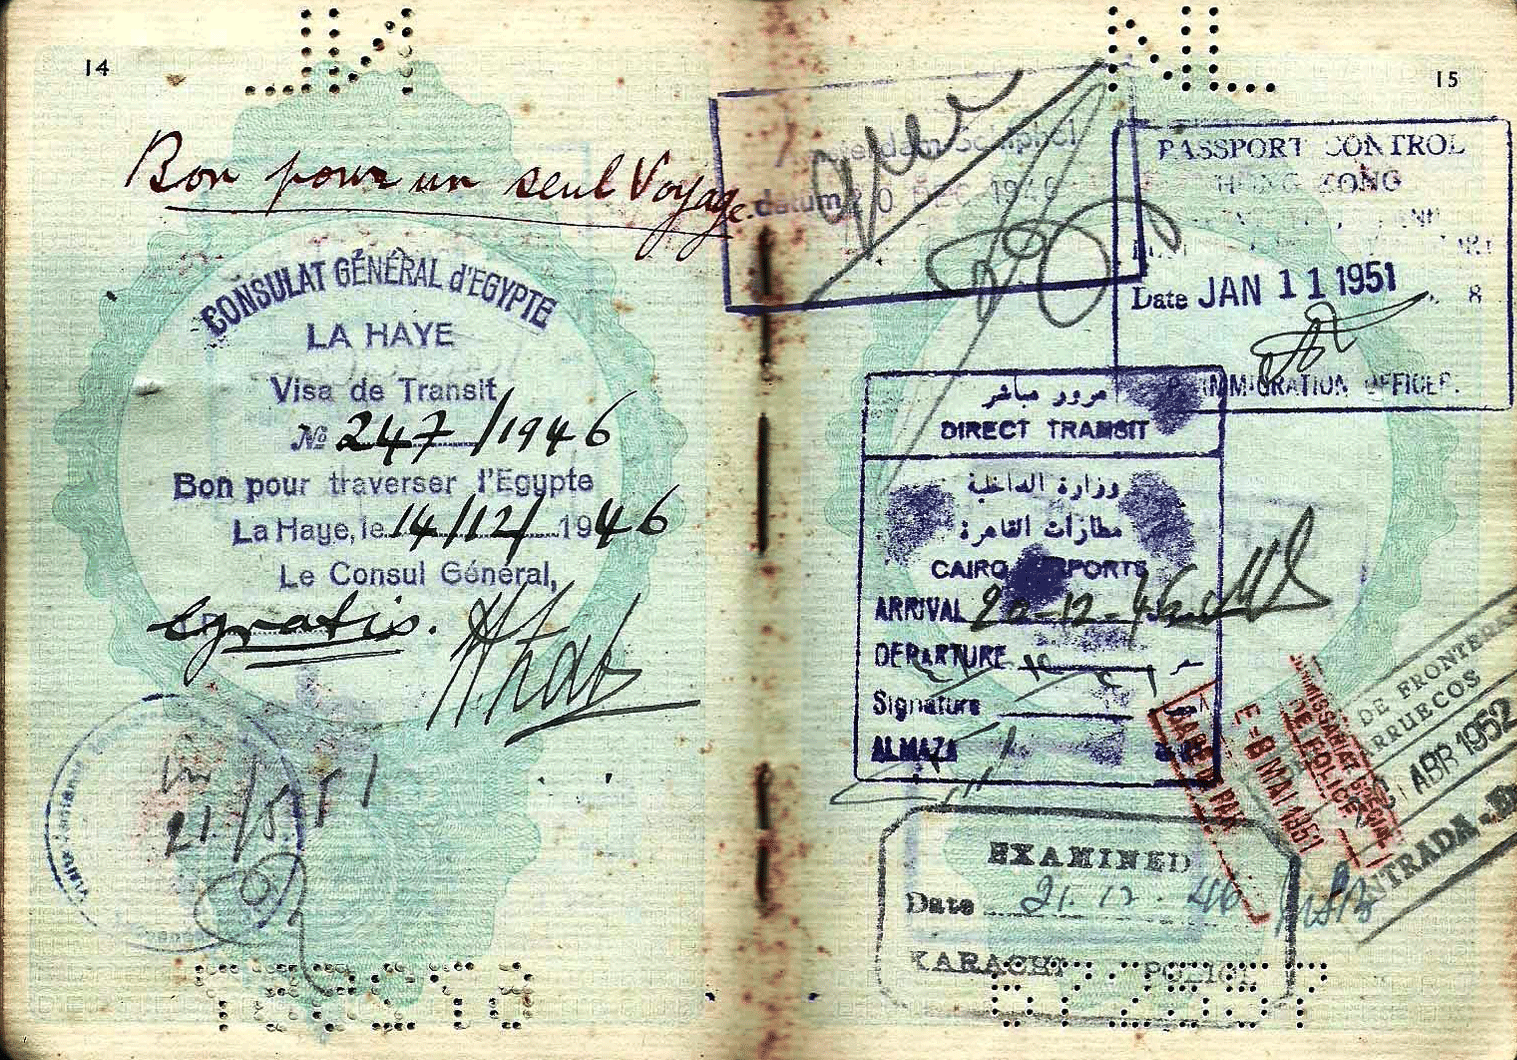 WW2 Dutch passport